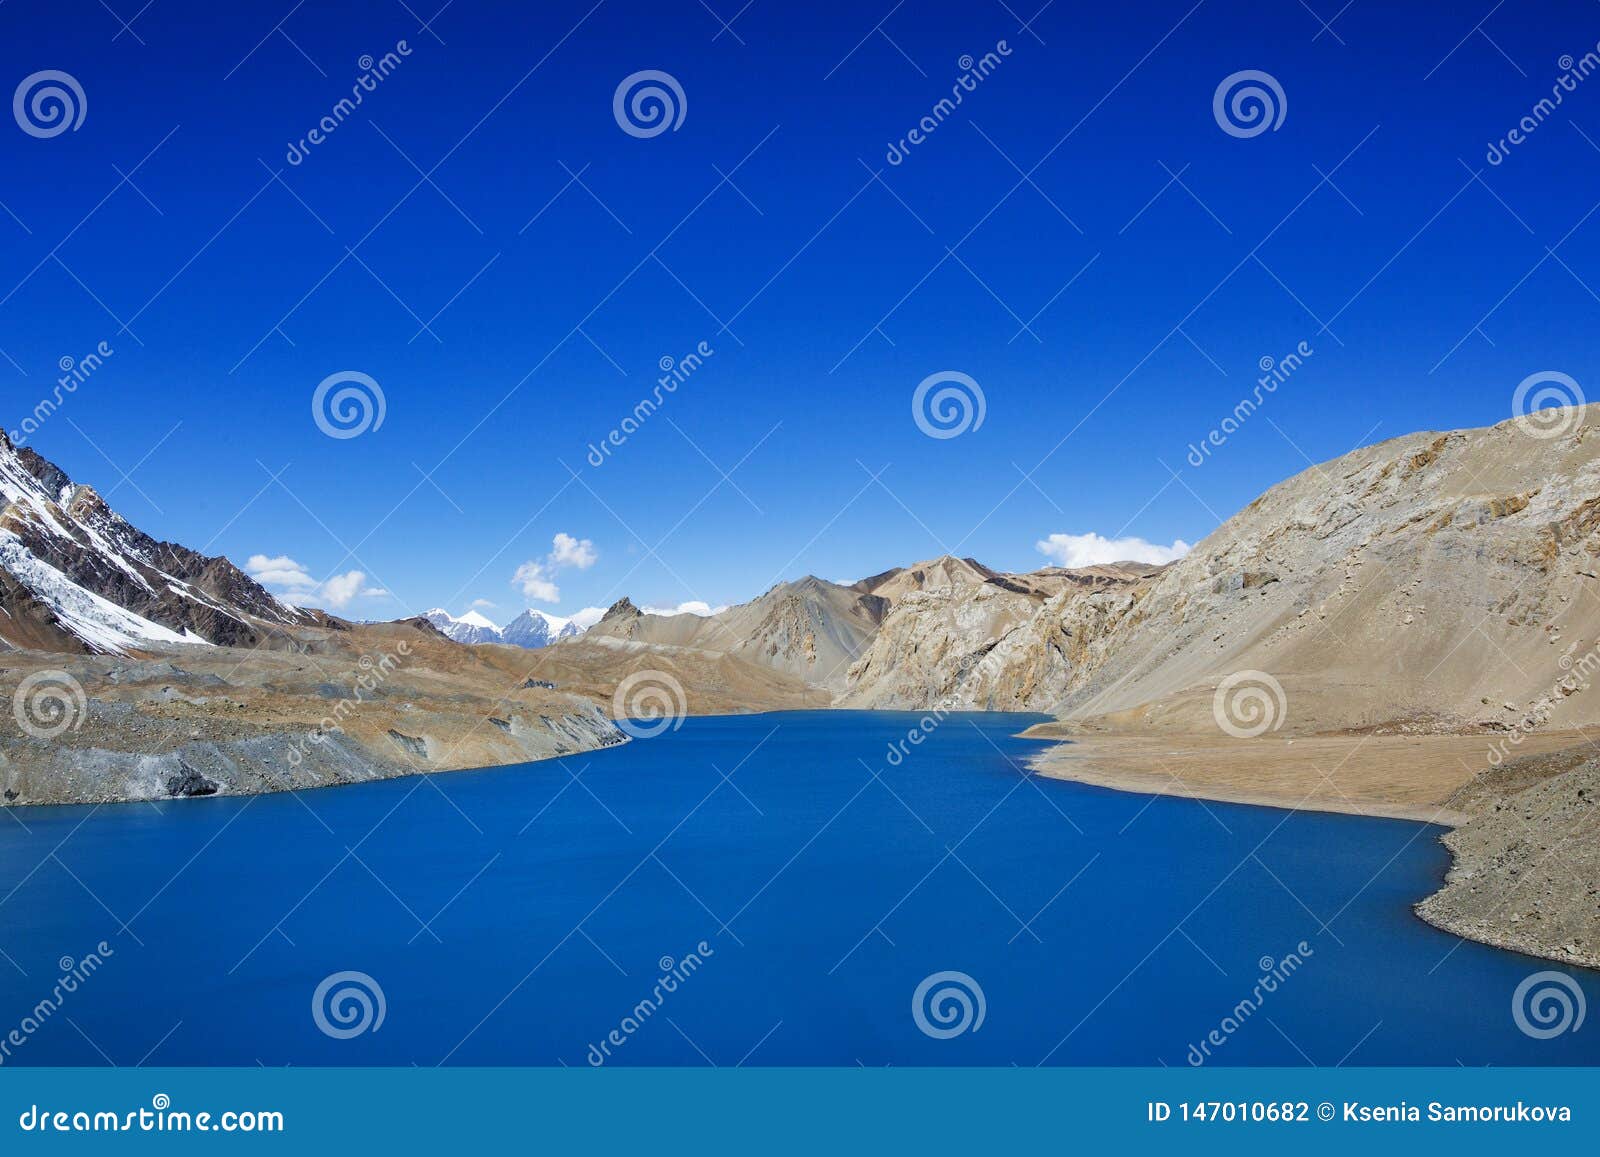 tilicho lake. himalaya mountains. nepal